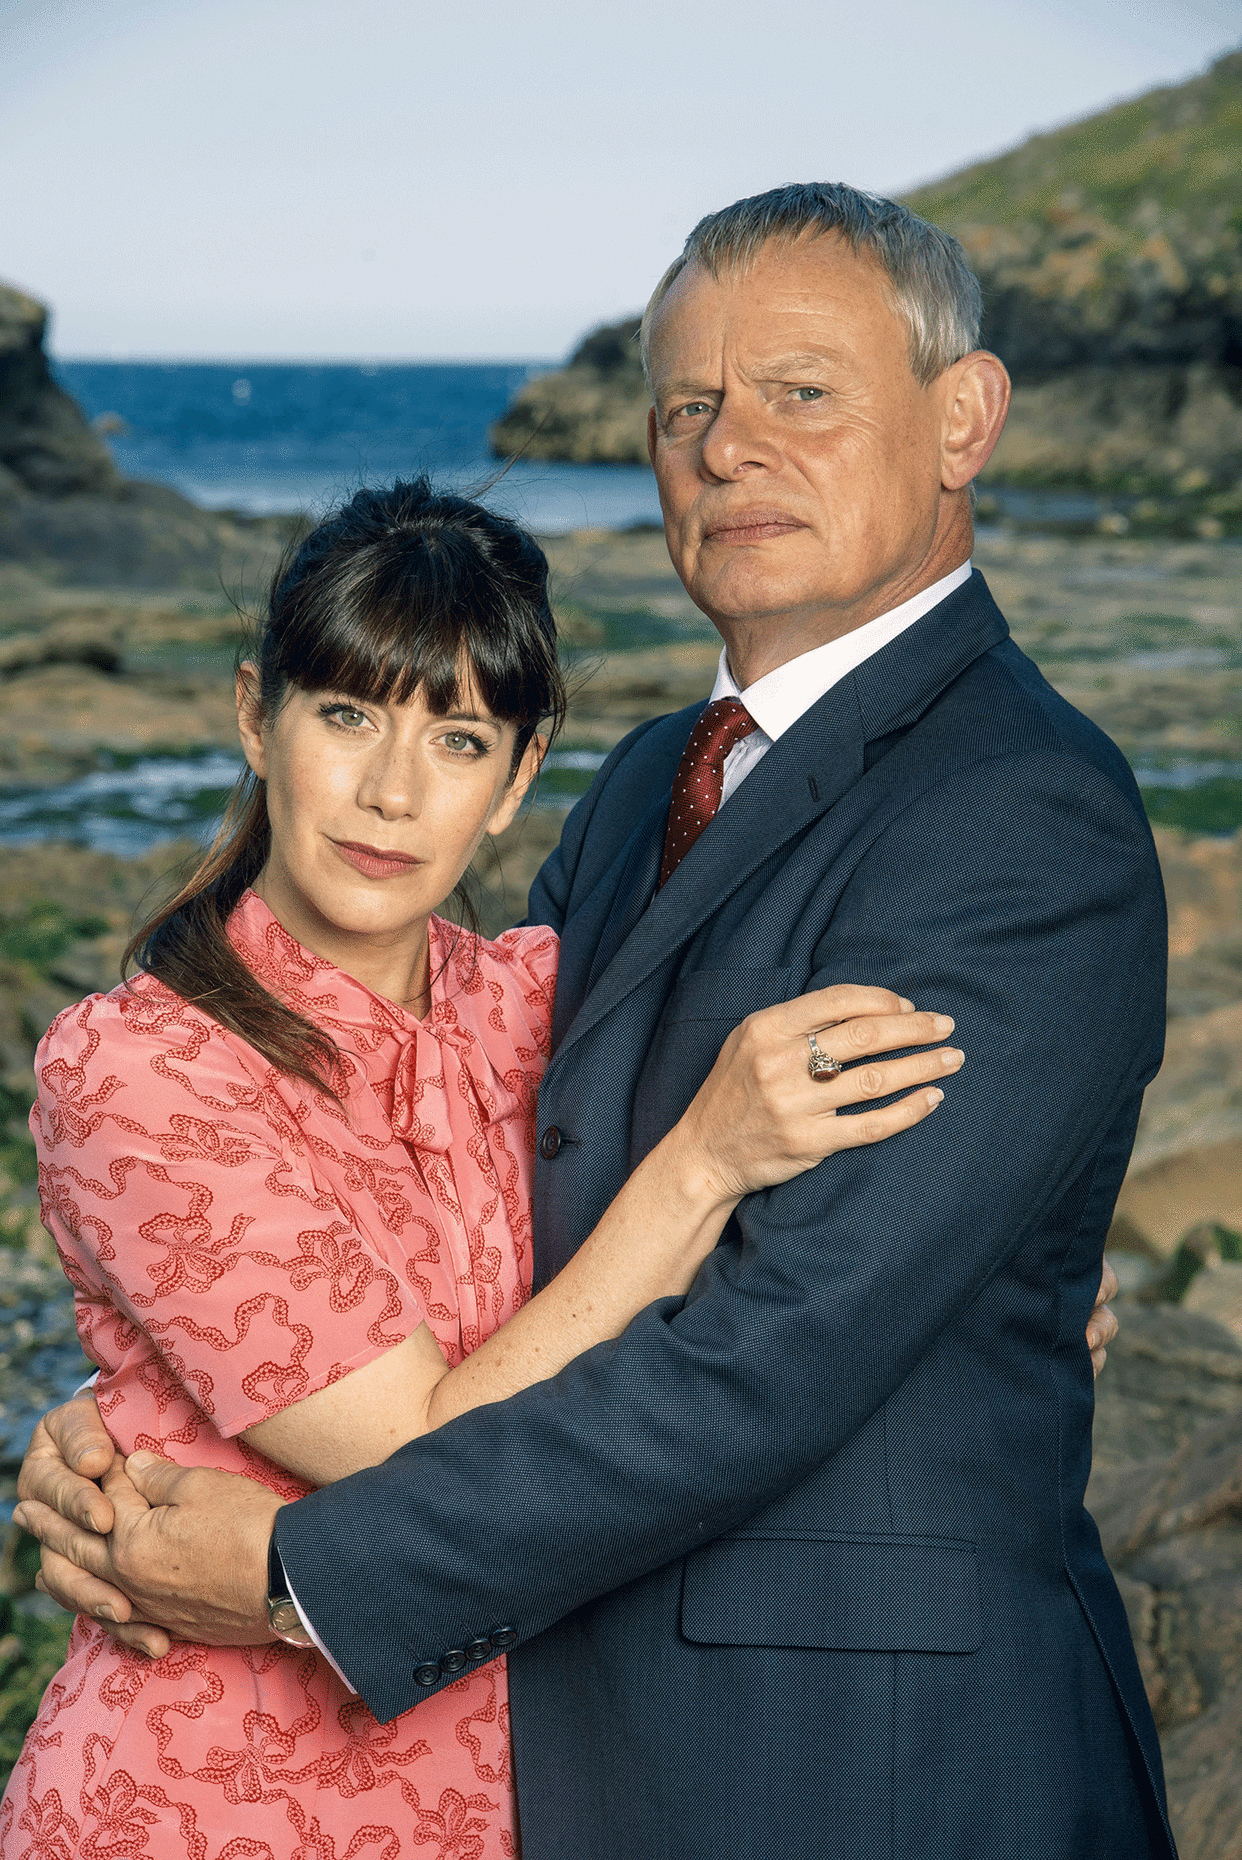 Caroline Catz and Martin Clunes star as Louisa and Martin. (ITV/Shutterstock)